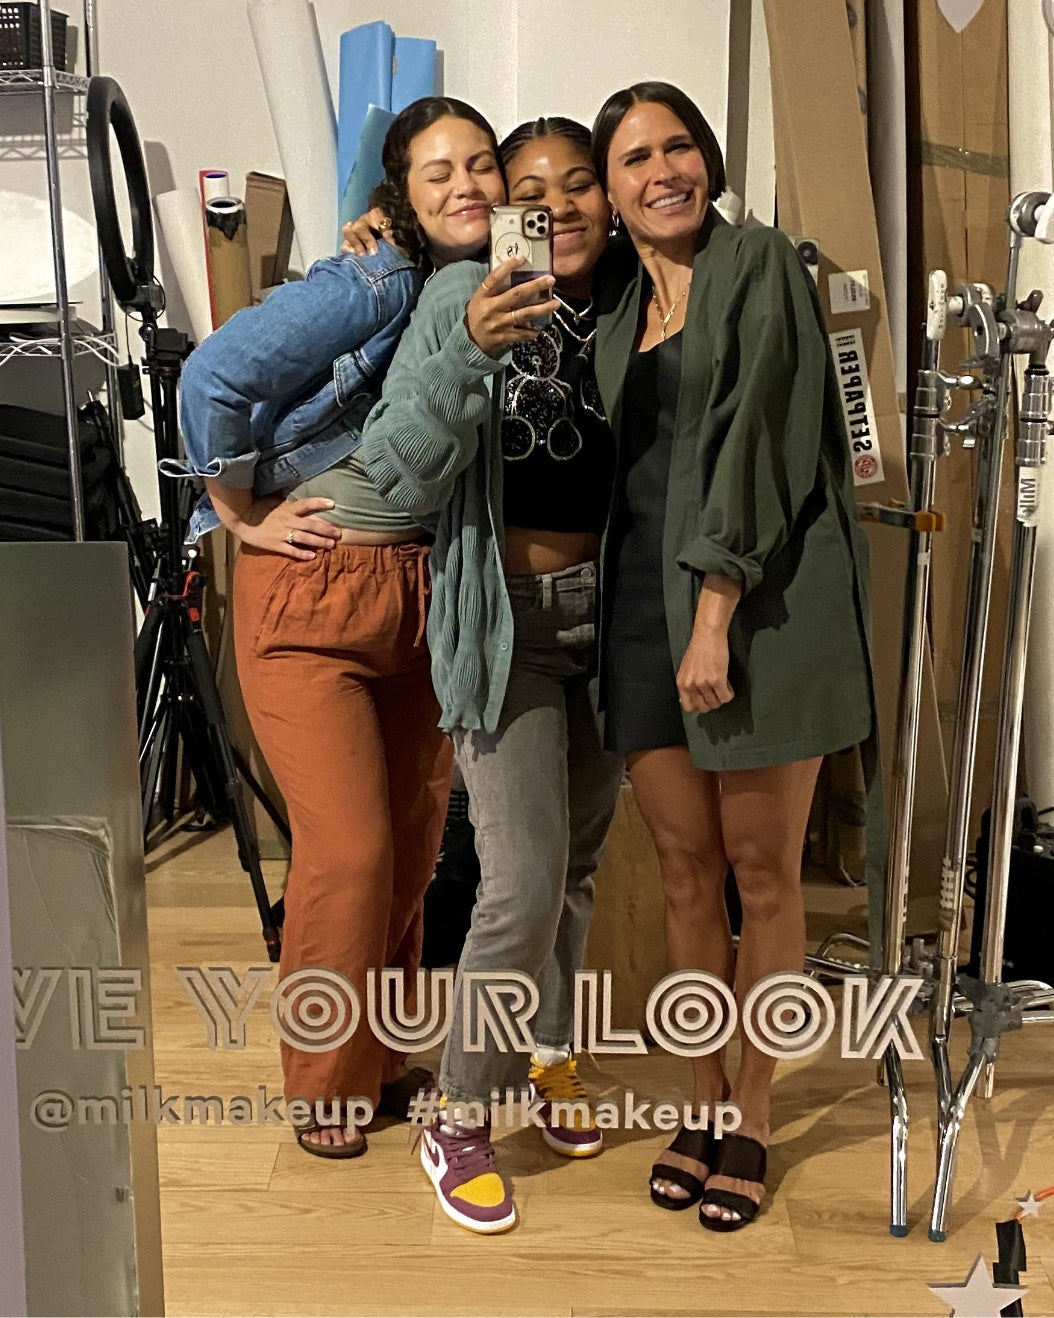 Mirror selfie of three Milk Makeup staffers